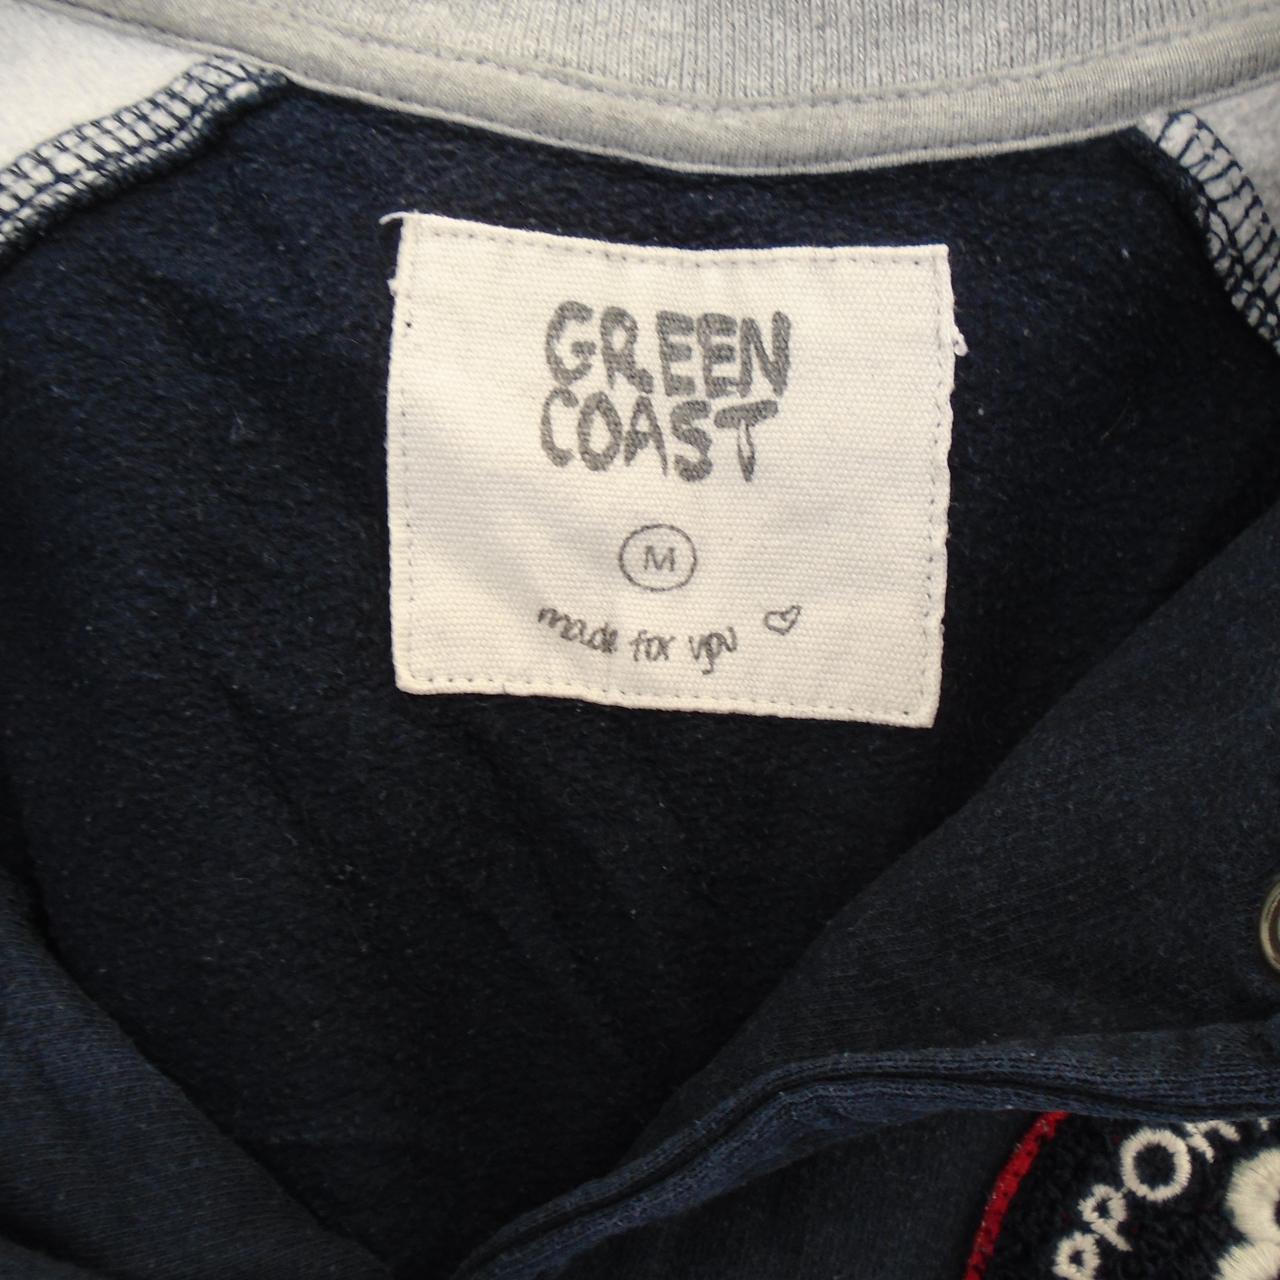 Women's Jacket Green Coast. Multicolor. M. Used. Good